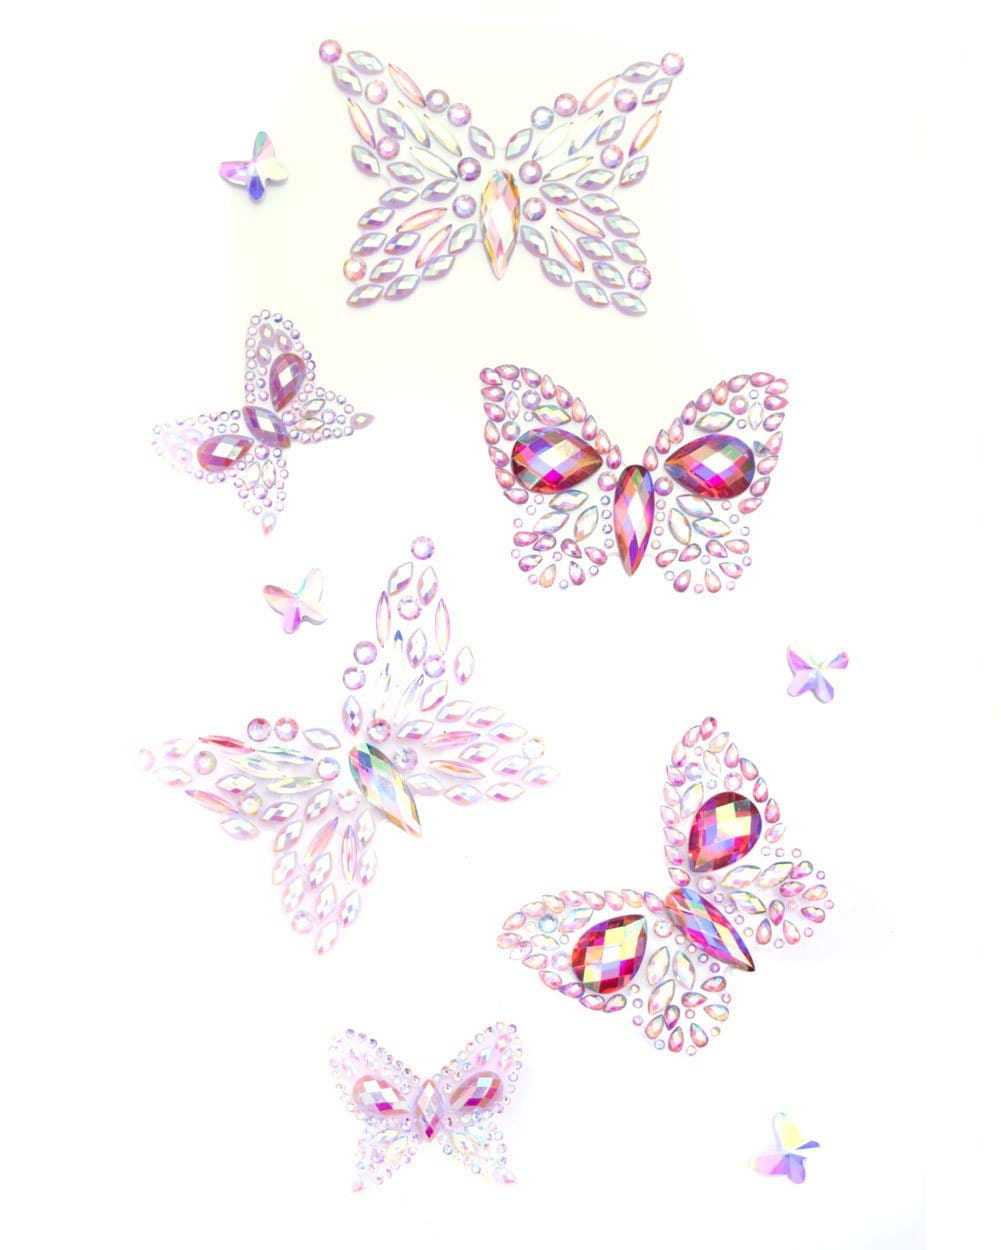 Lunautics Cece Iridescent Face Jewels - Purple/White